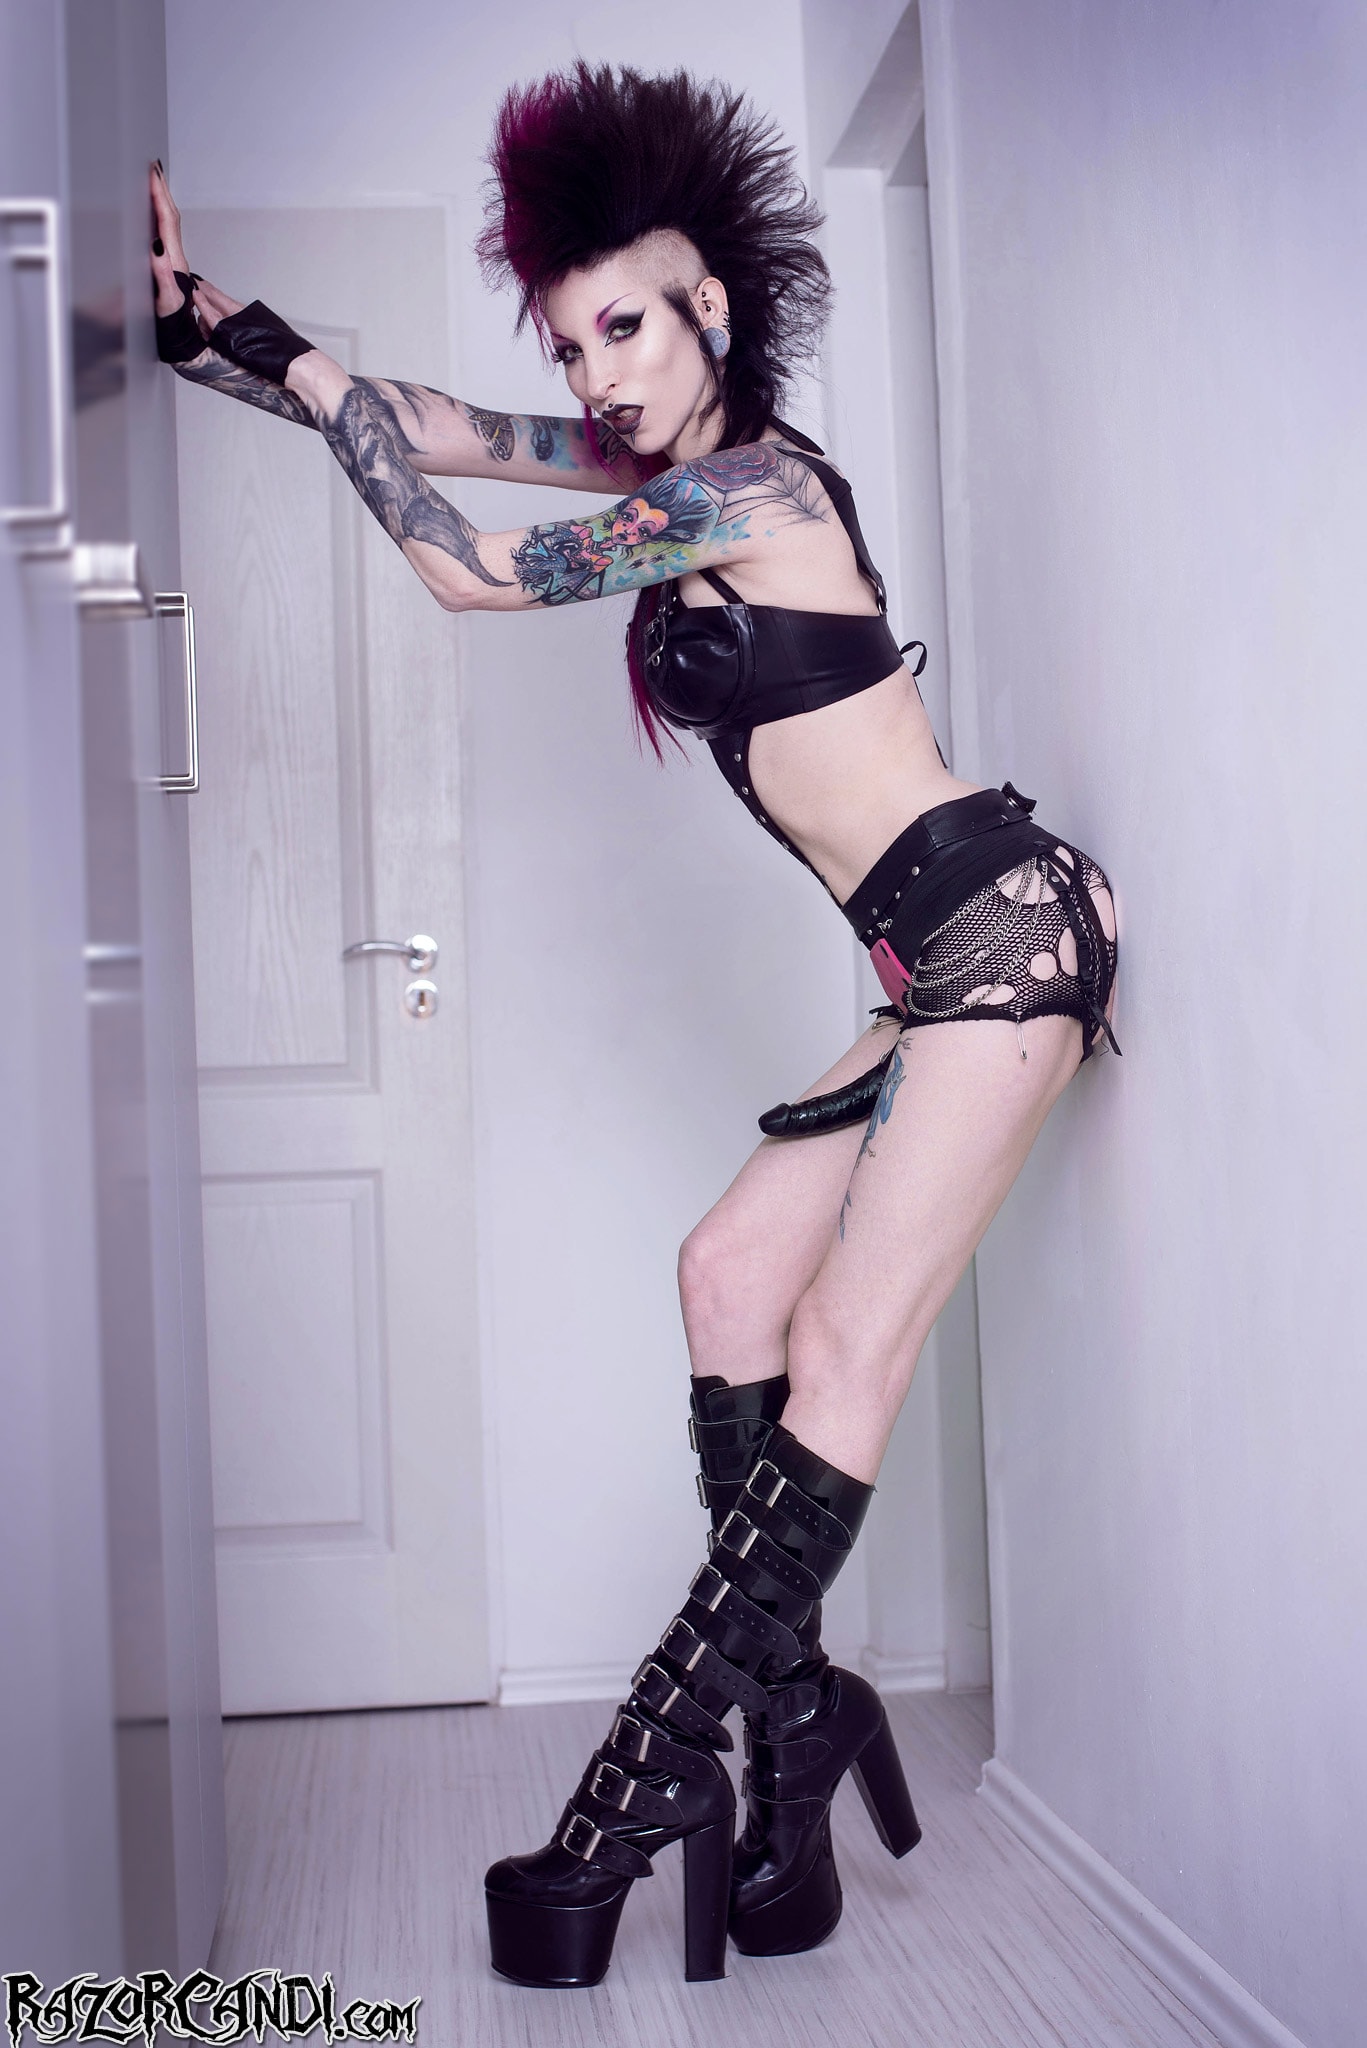 Razor Candi 'Jewelled buttplug for strap-on wielding tattooed Goth girl' starring Razor Candi (Photo 3)